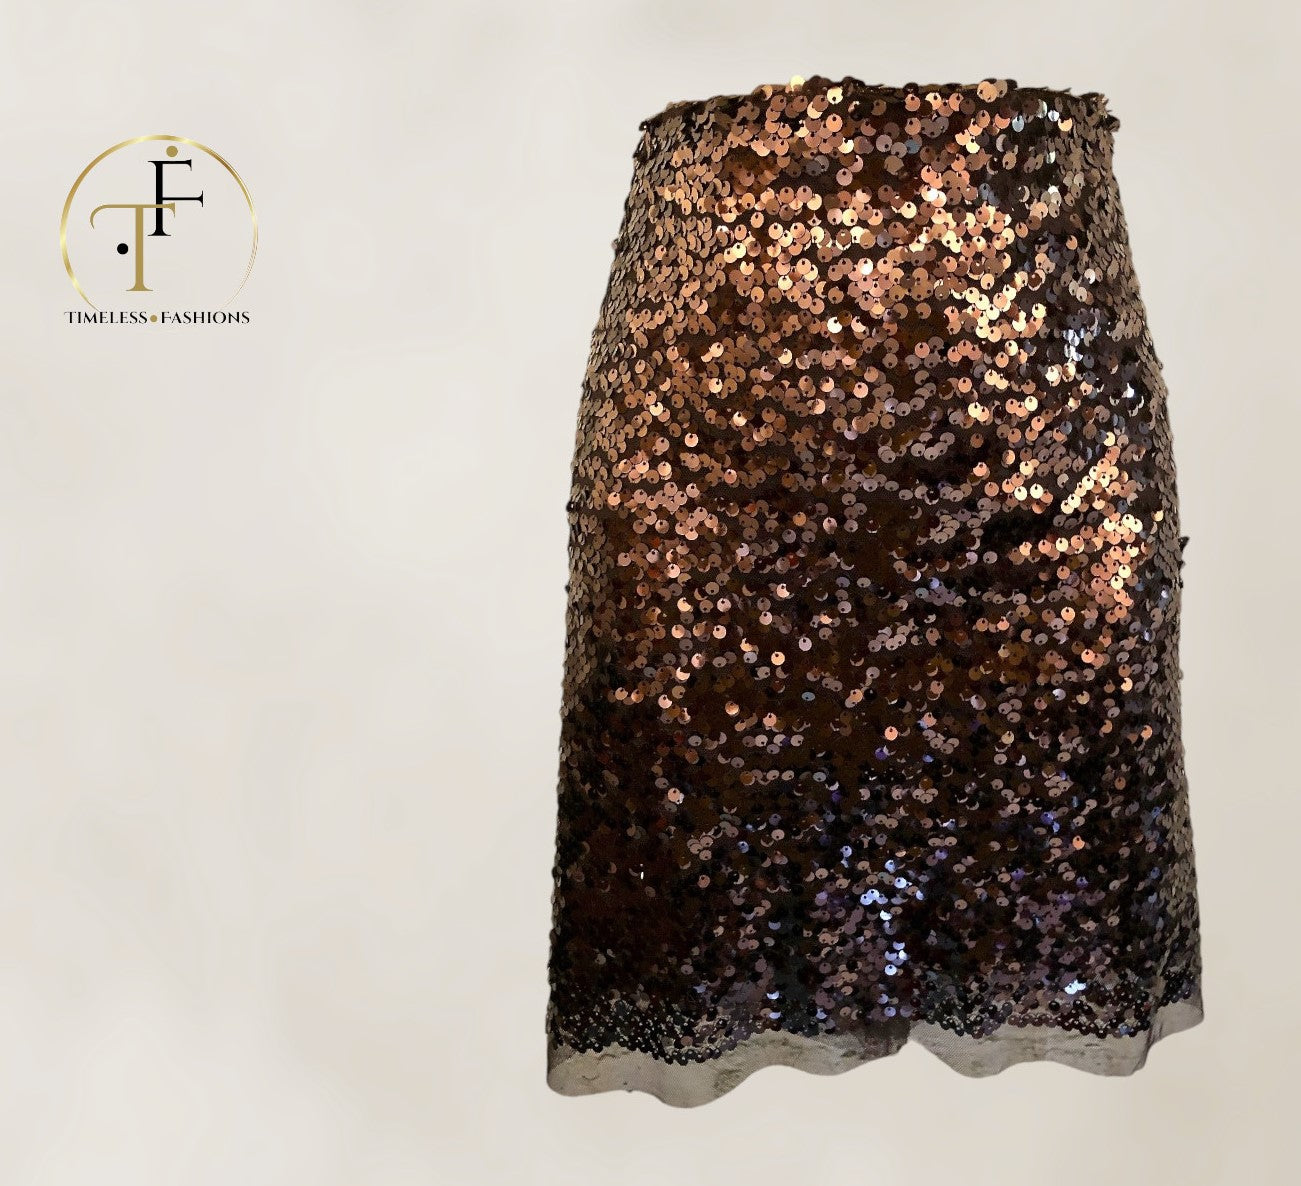 Sandwich Brown Women's Bronze & Copper Sequin Mini Pencil Skirt UK 14 US 10 EU 42 Timeless Fashions